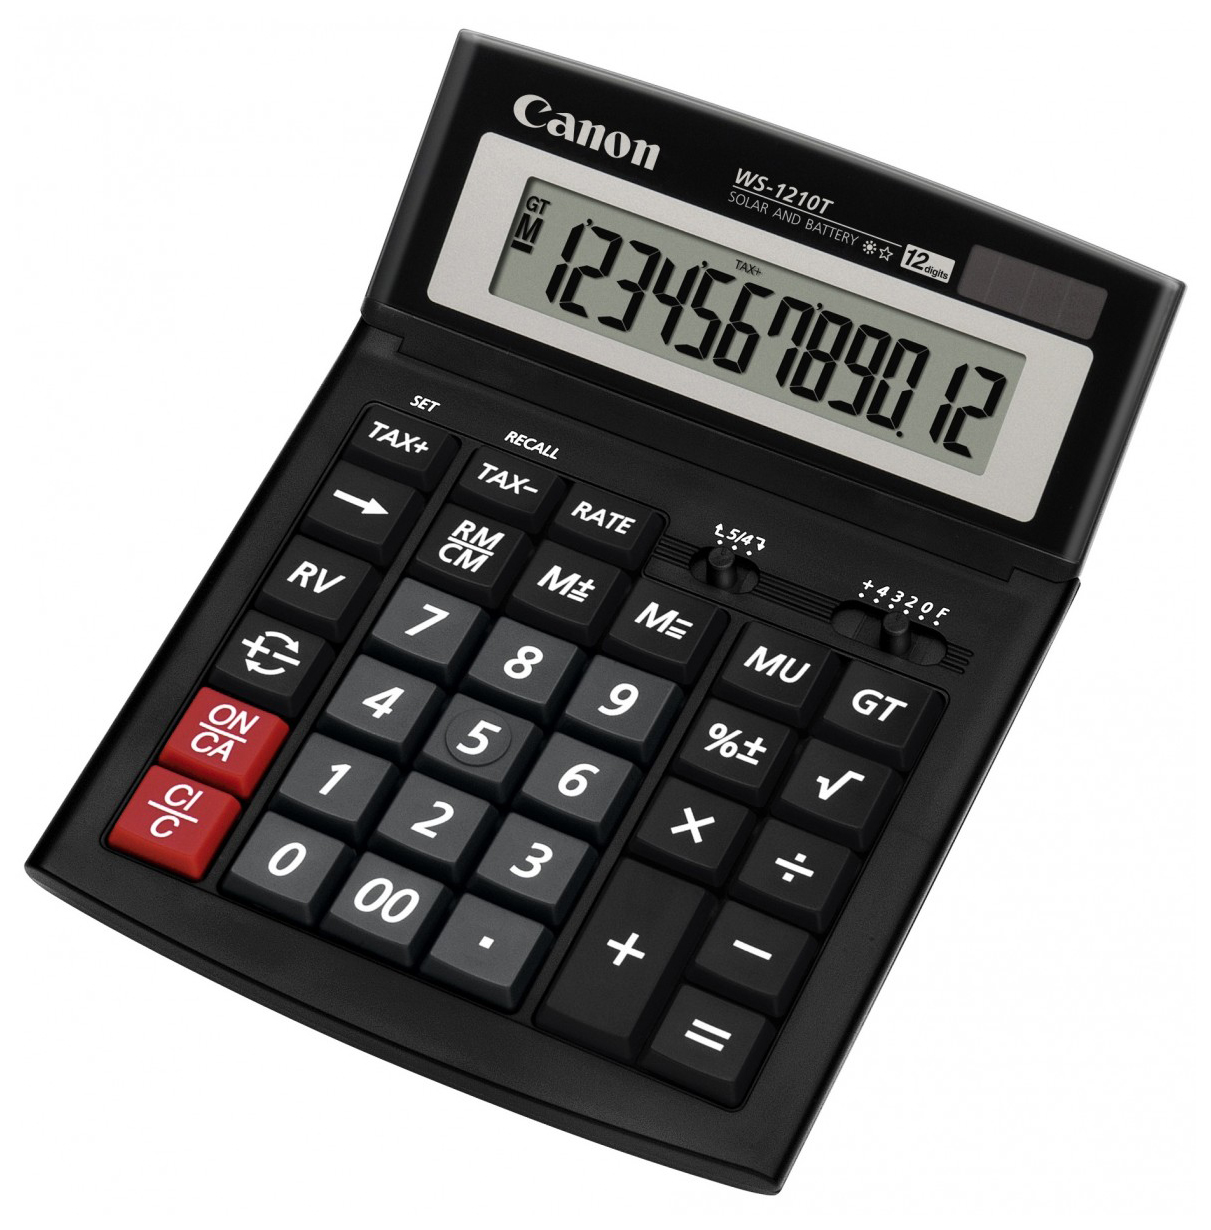 Calculator. Калькулятор Canon WS-1410t. Калькулятор Canon WS-1610t. Canon calculator WS-1210t HB. WS-1610t.